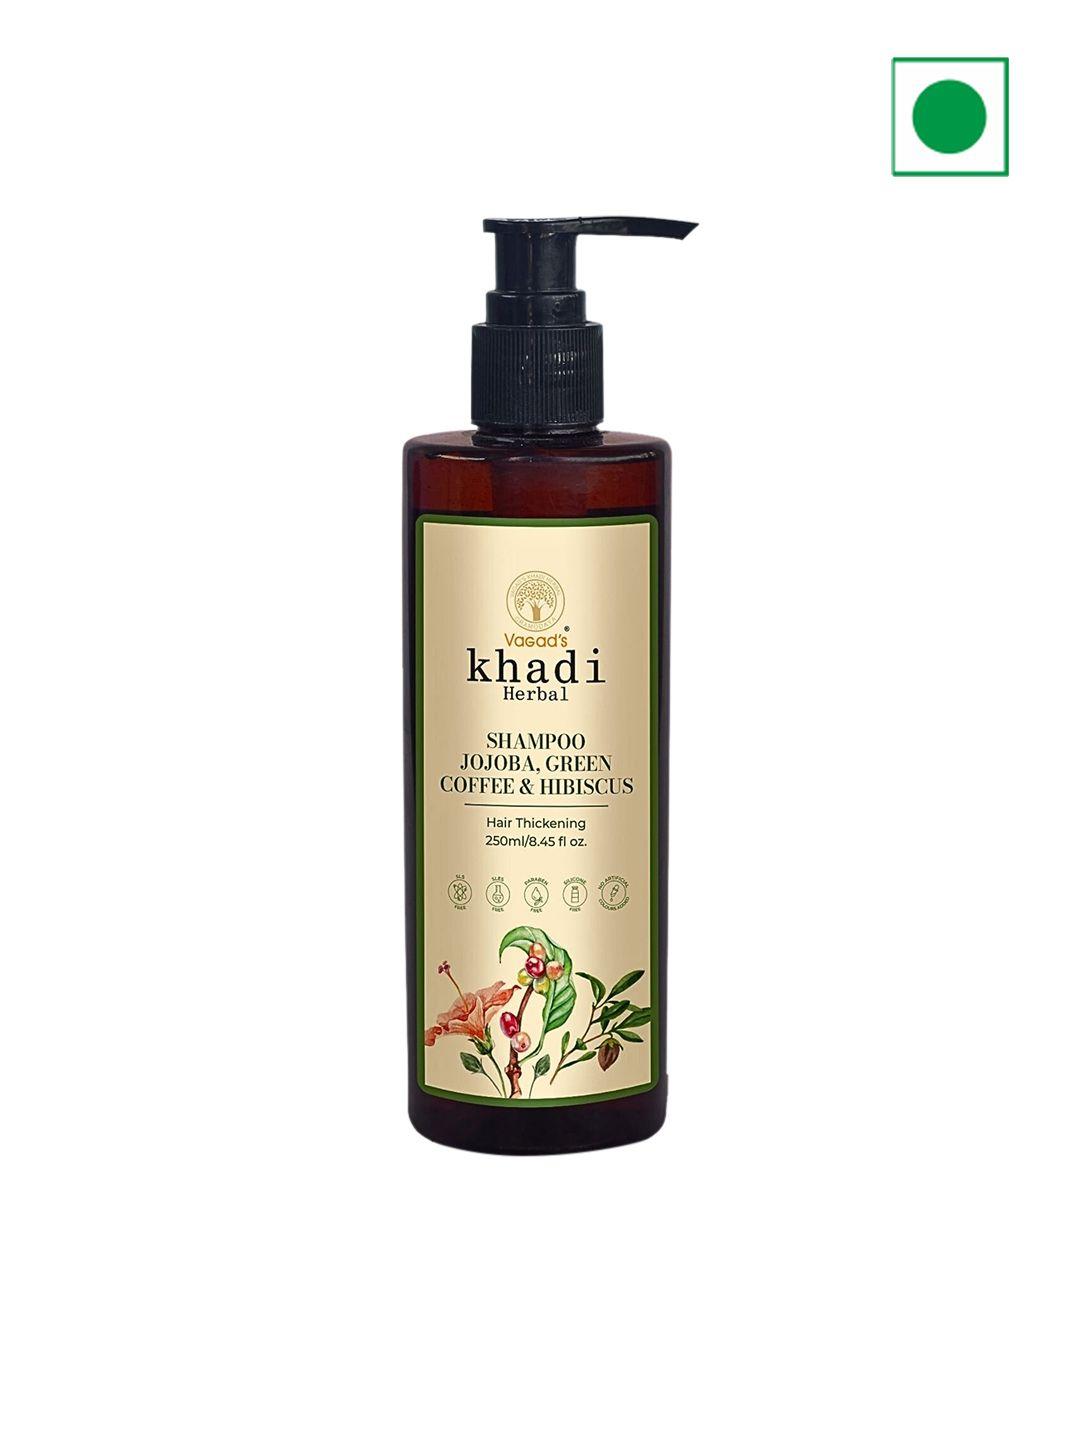 vagads khadi herbal jojoba with green coffee & hibiscus shampoo